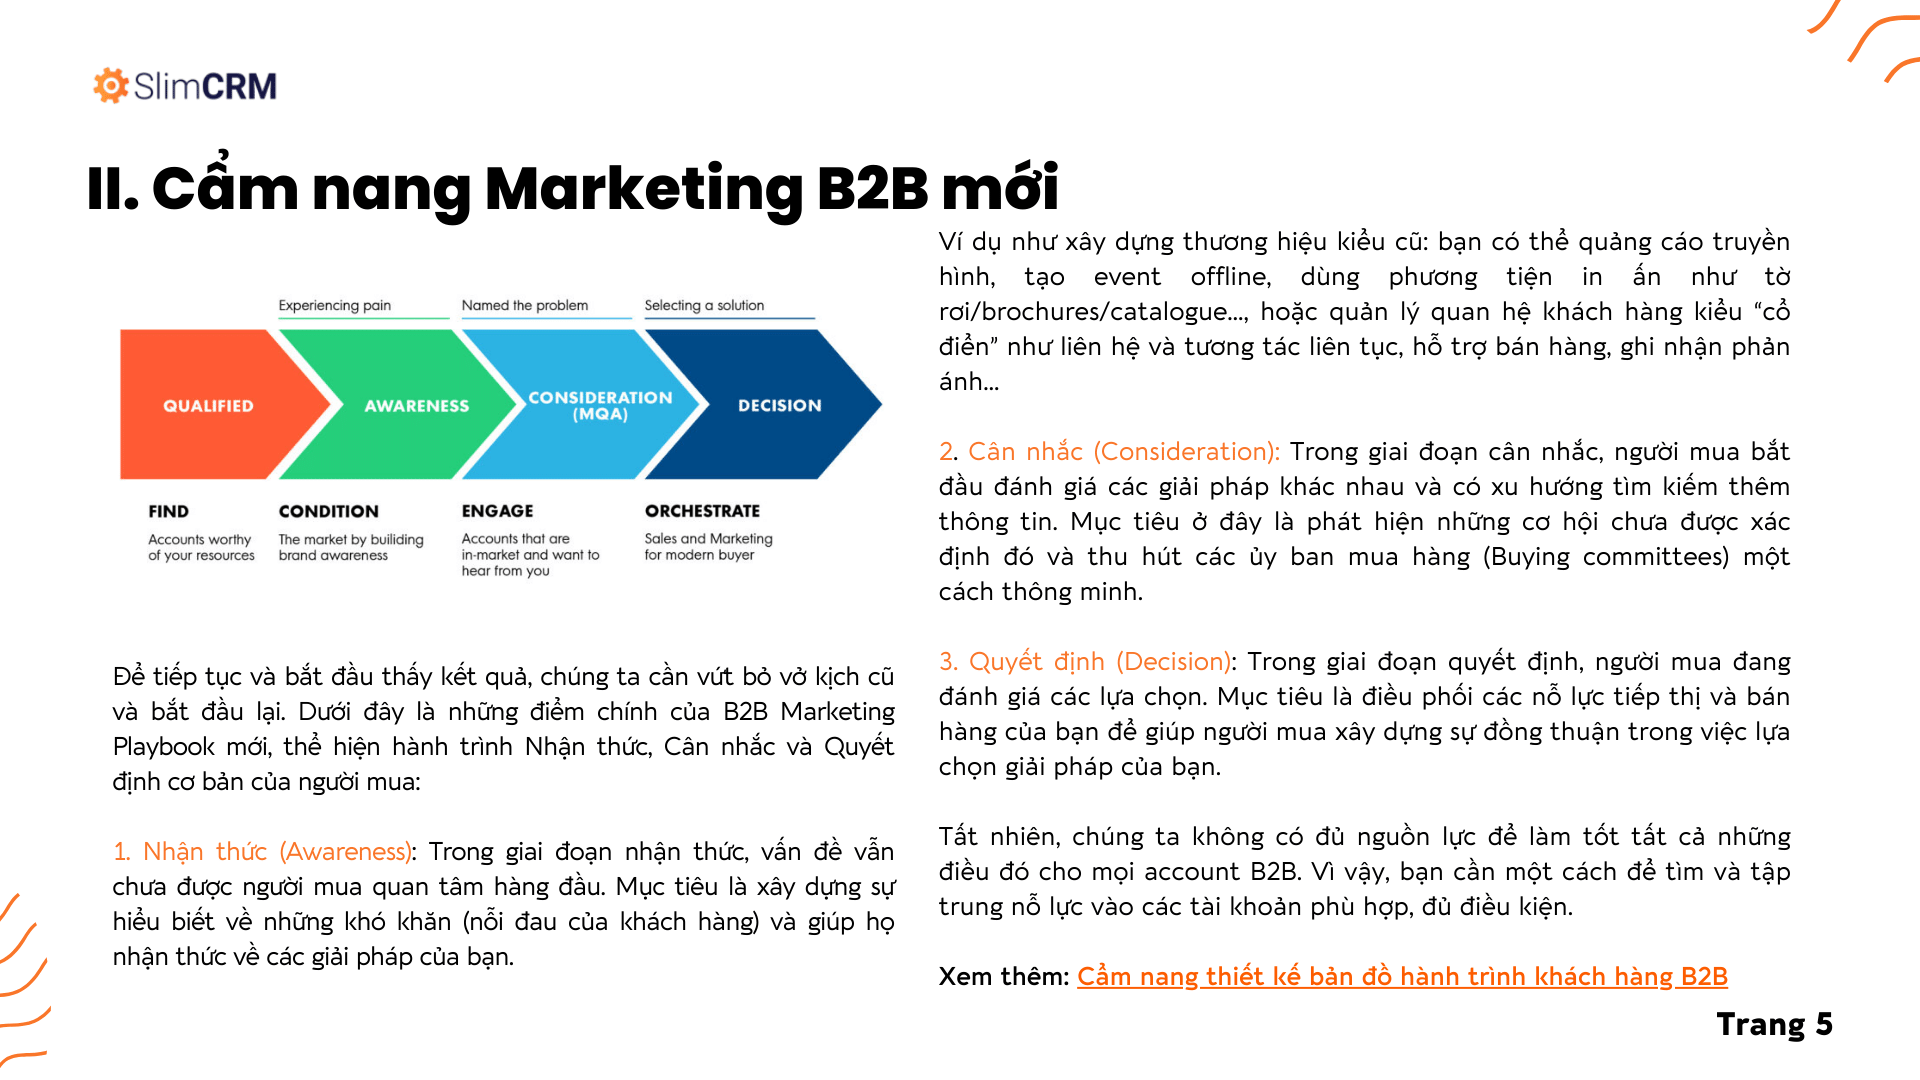 B2B Marketing Playbook mới